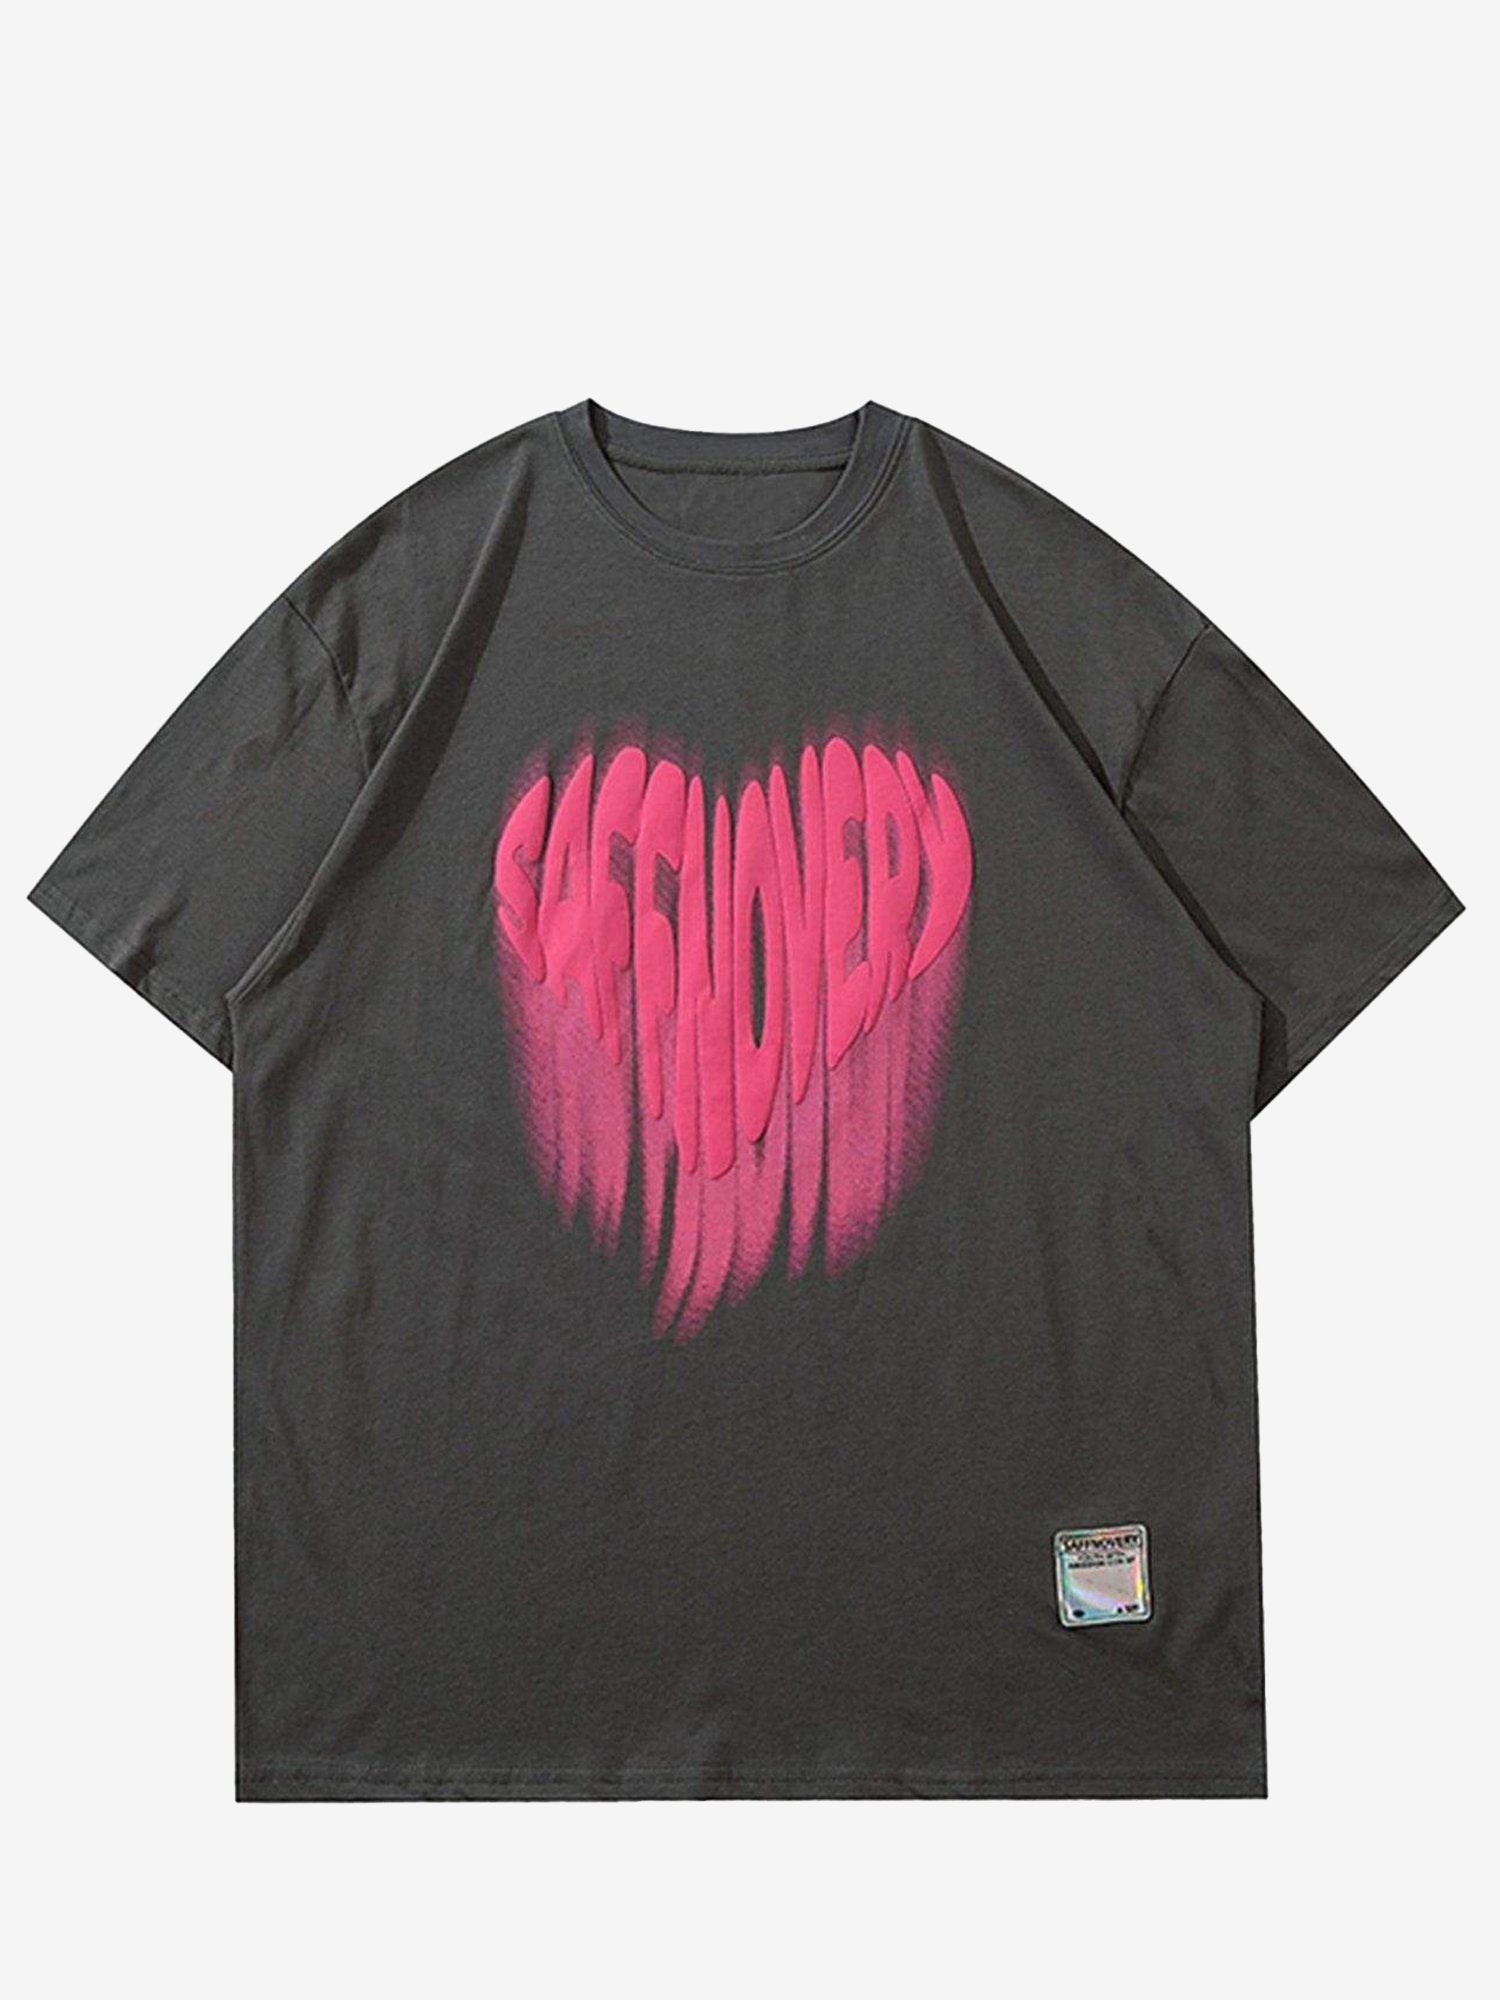 JUSTNOTAG Love Letter Graffiti T-shirts Oversize